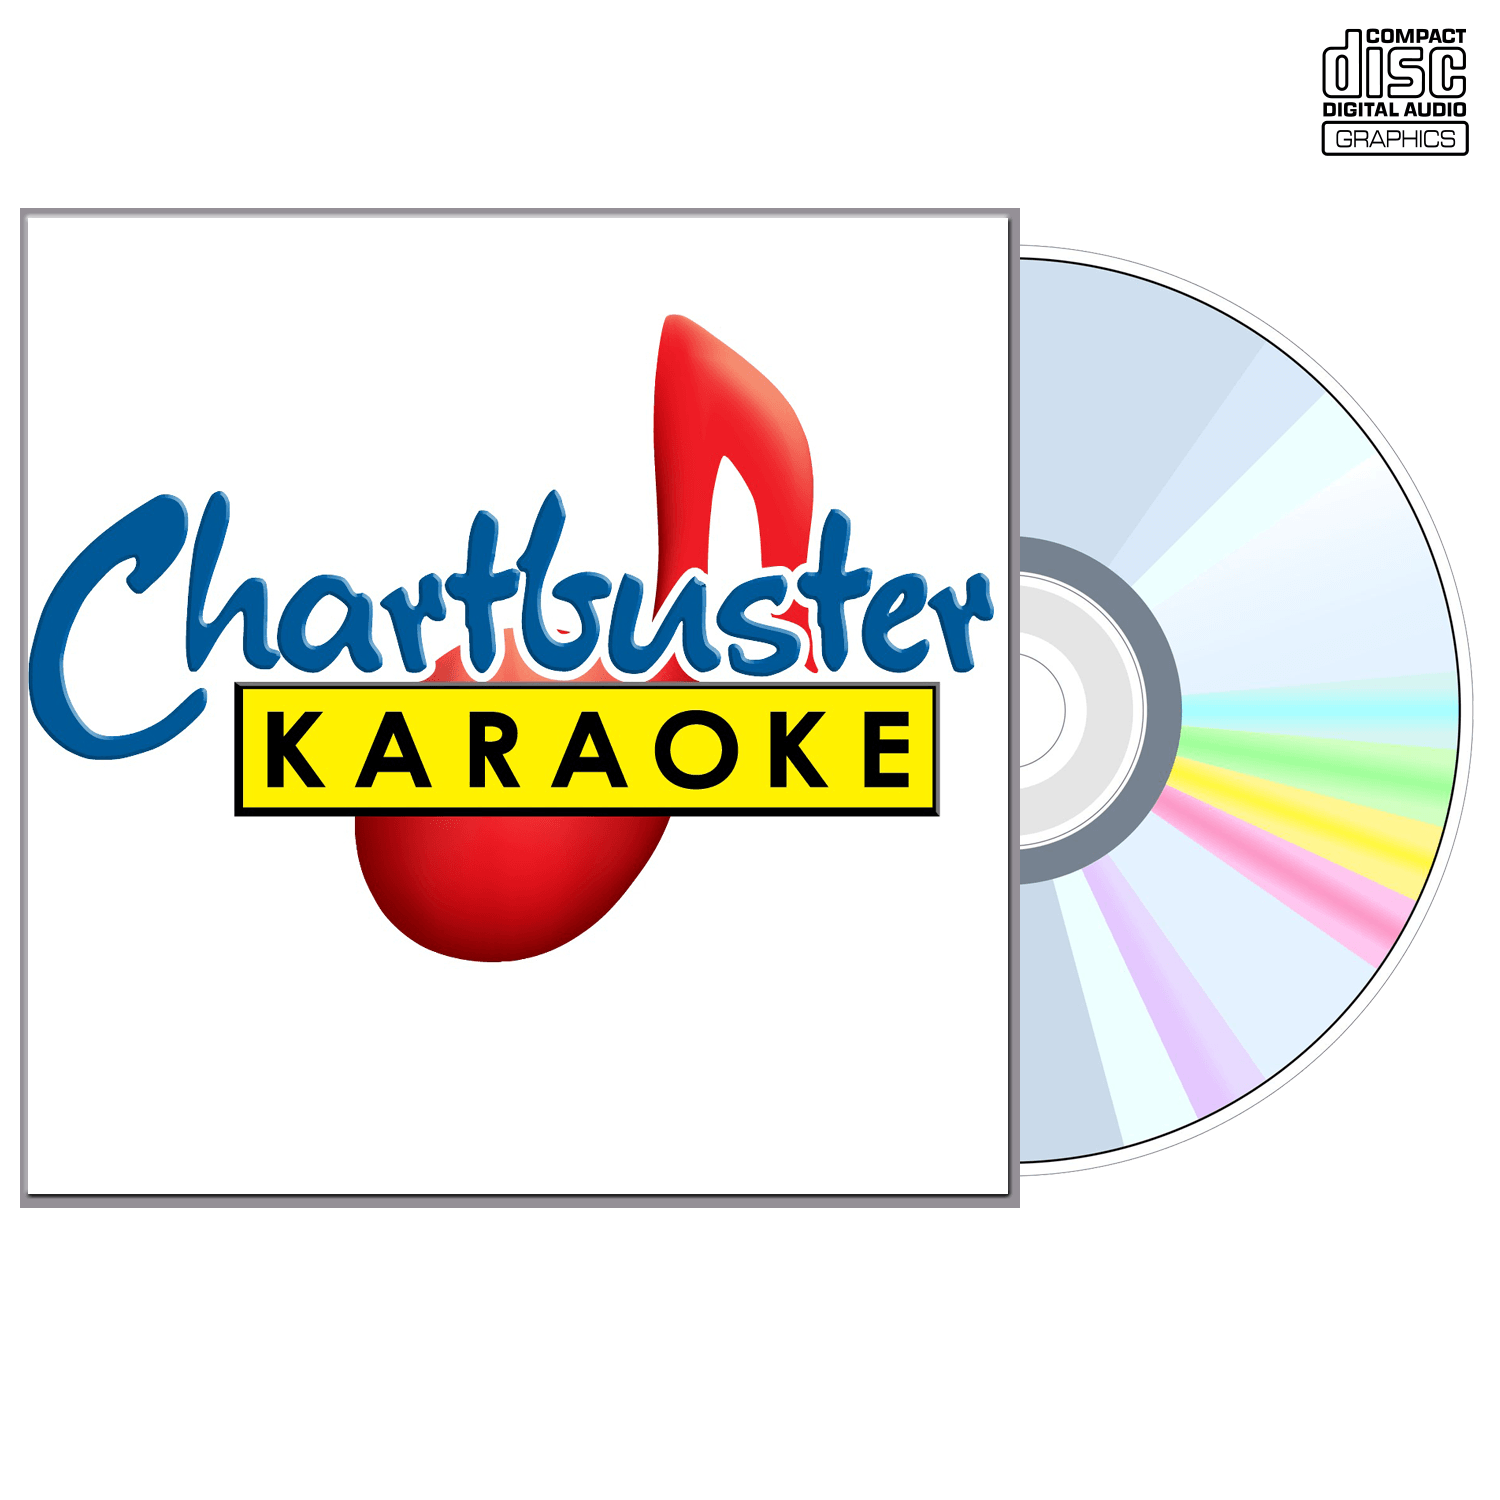 Best Of Eddy Arnold - CD+G - Chartbuster Karaoke - Karaoke Home Entertainment